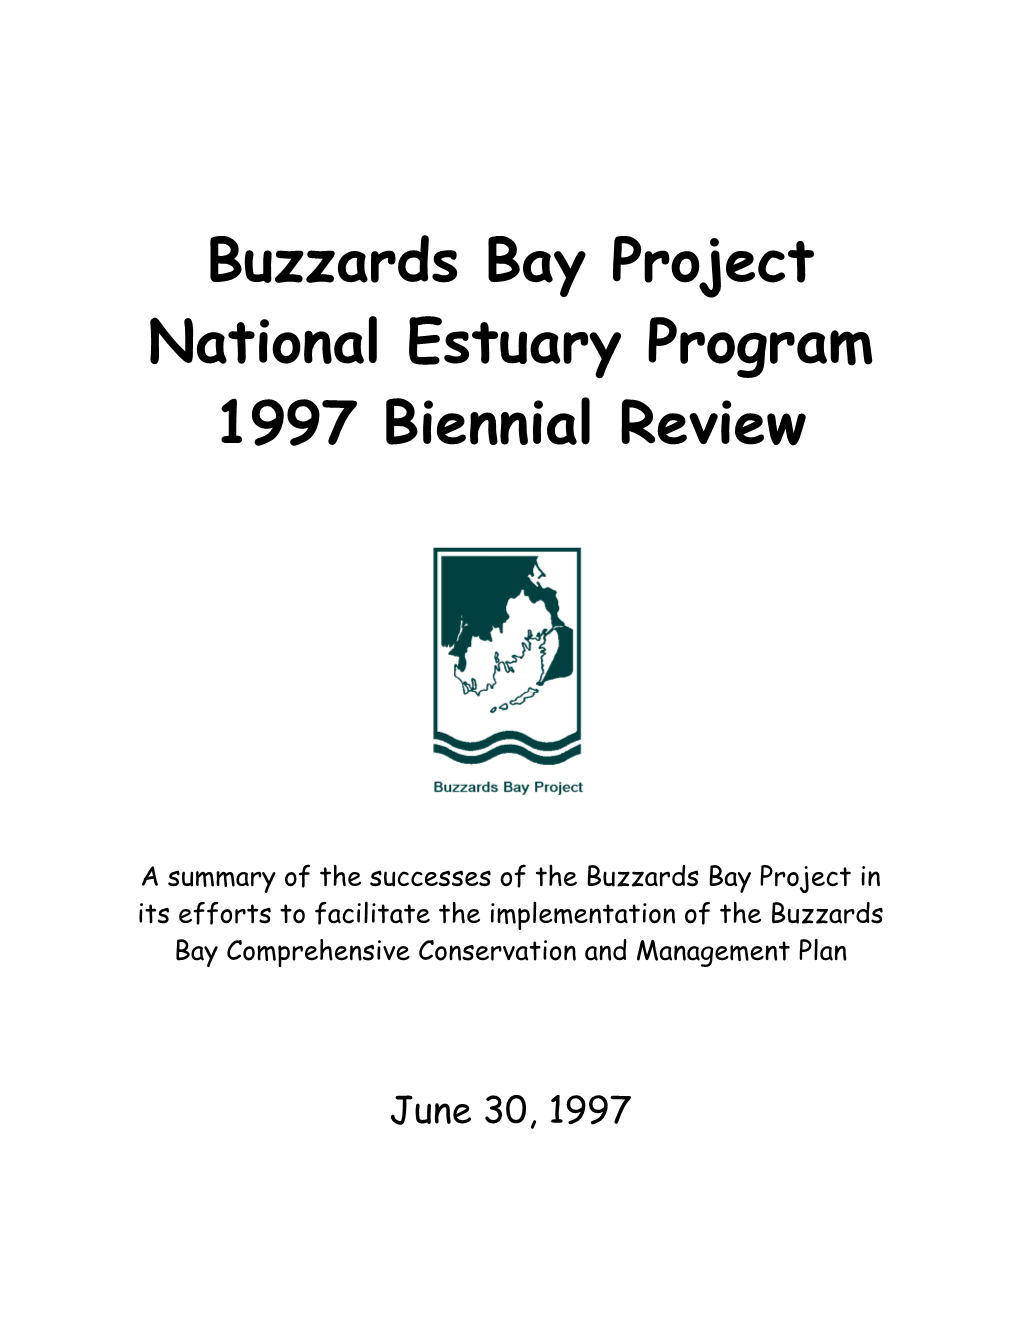 Buzzards Bay Project National Estuary Program 1997 Biennial Review